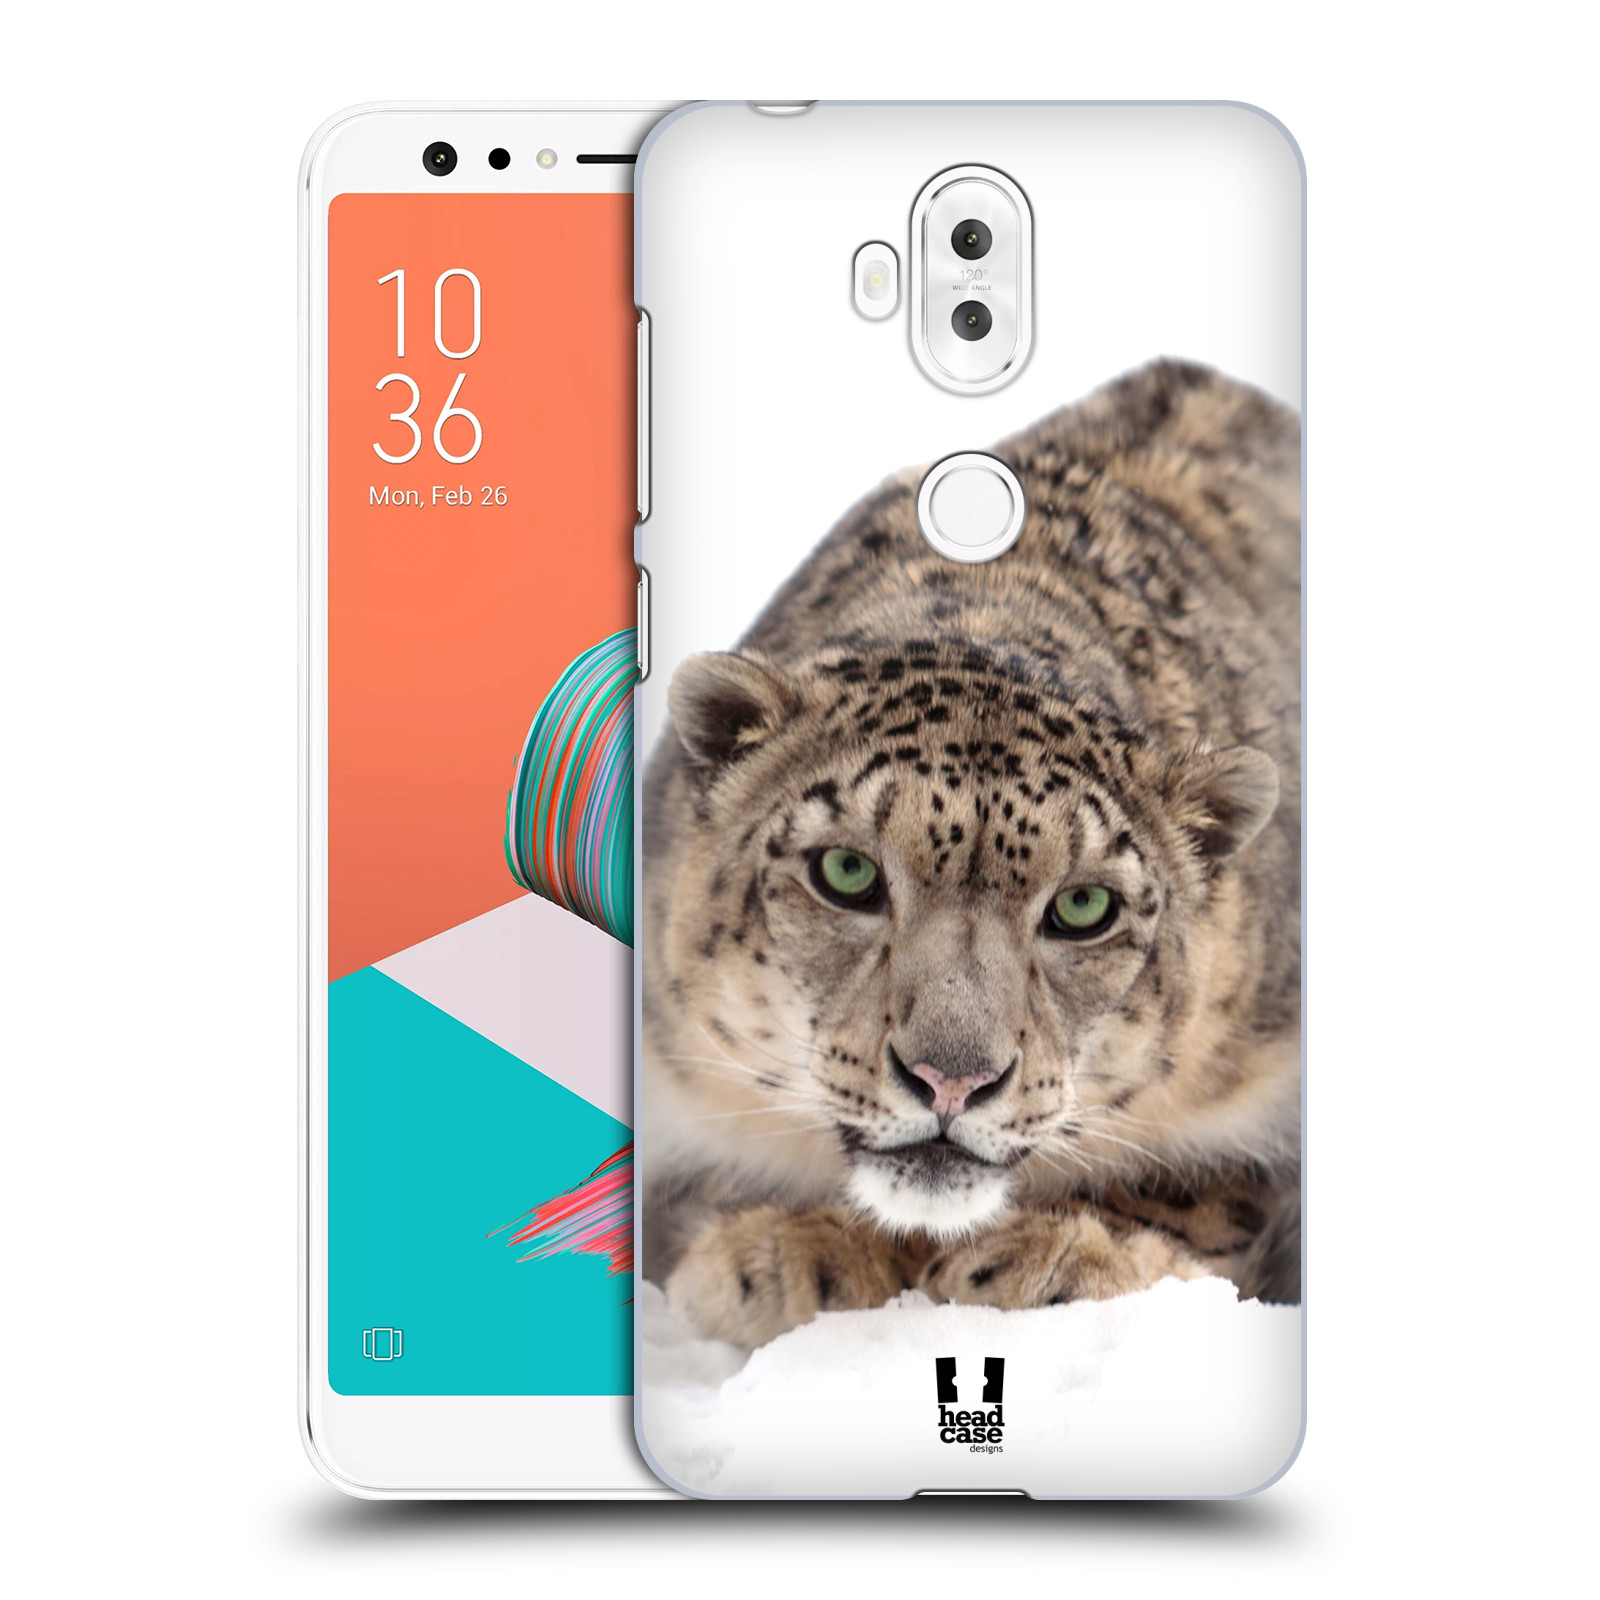 HEAD CASE plastový obal na mobil Asus Zenfone 5 LITE ZC600KL vzor Divočina, Divoký život a zvířata foto SNĚŽNÝ LEOPARD